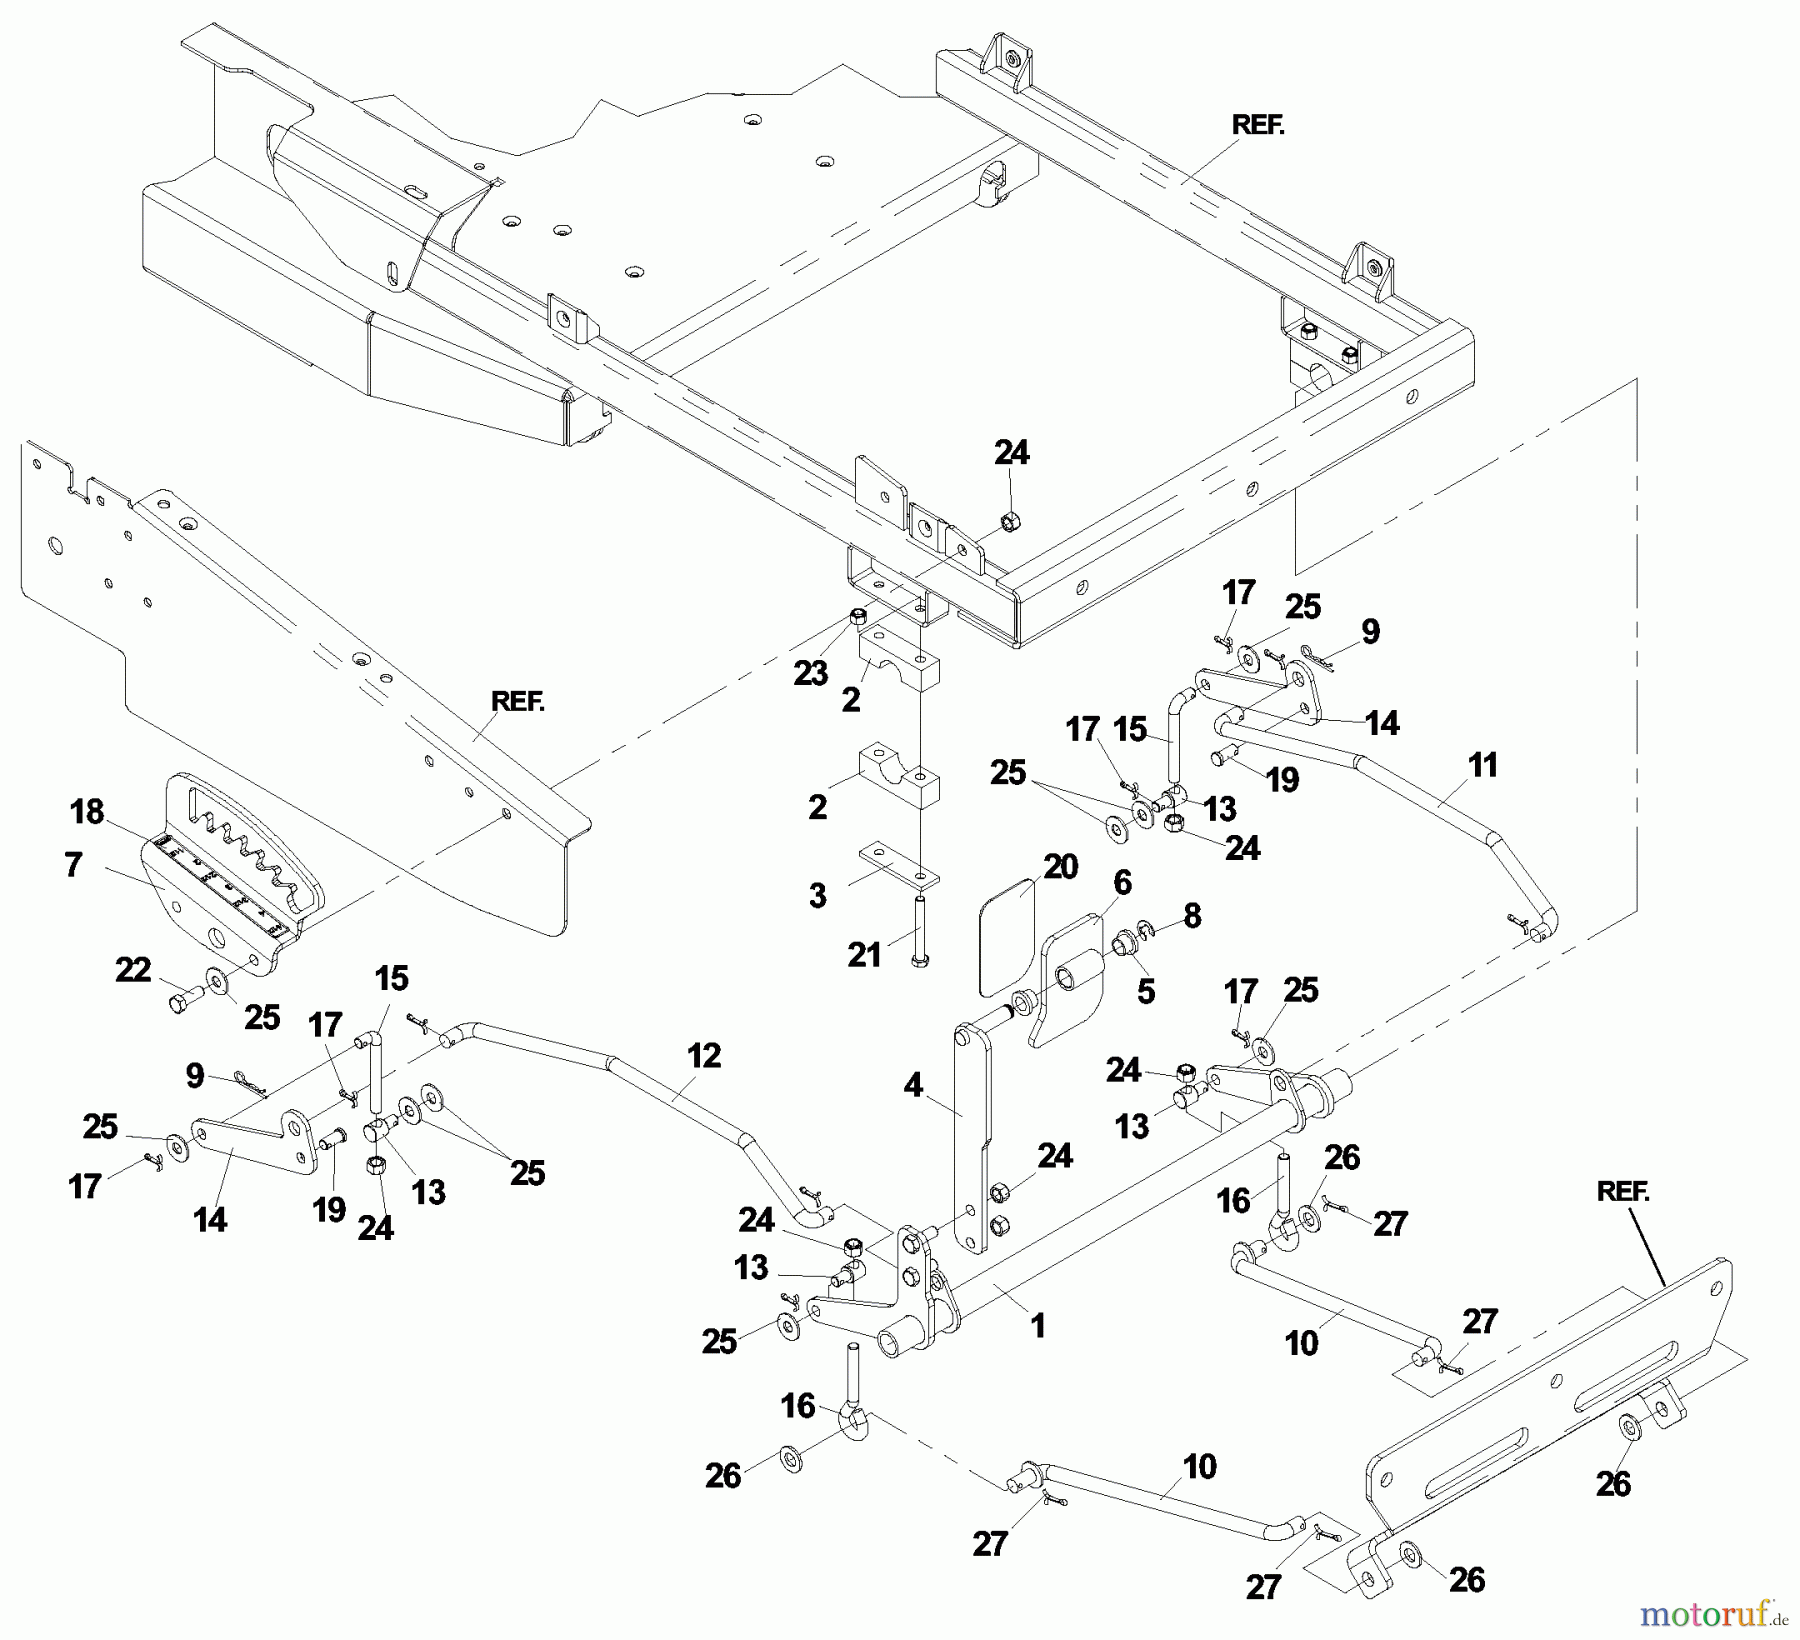  Husqvarna Nullwendekreismäher, Zero-Turn CZ 4815 (968999219) - Husqvarna KAA Zero-Turn Mower (2002-11 & After) Deck Lift Assembly